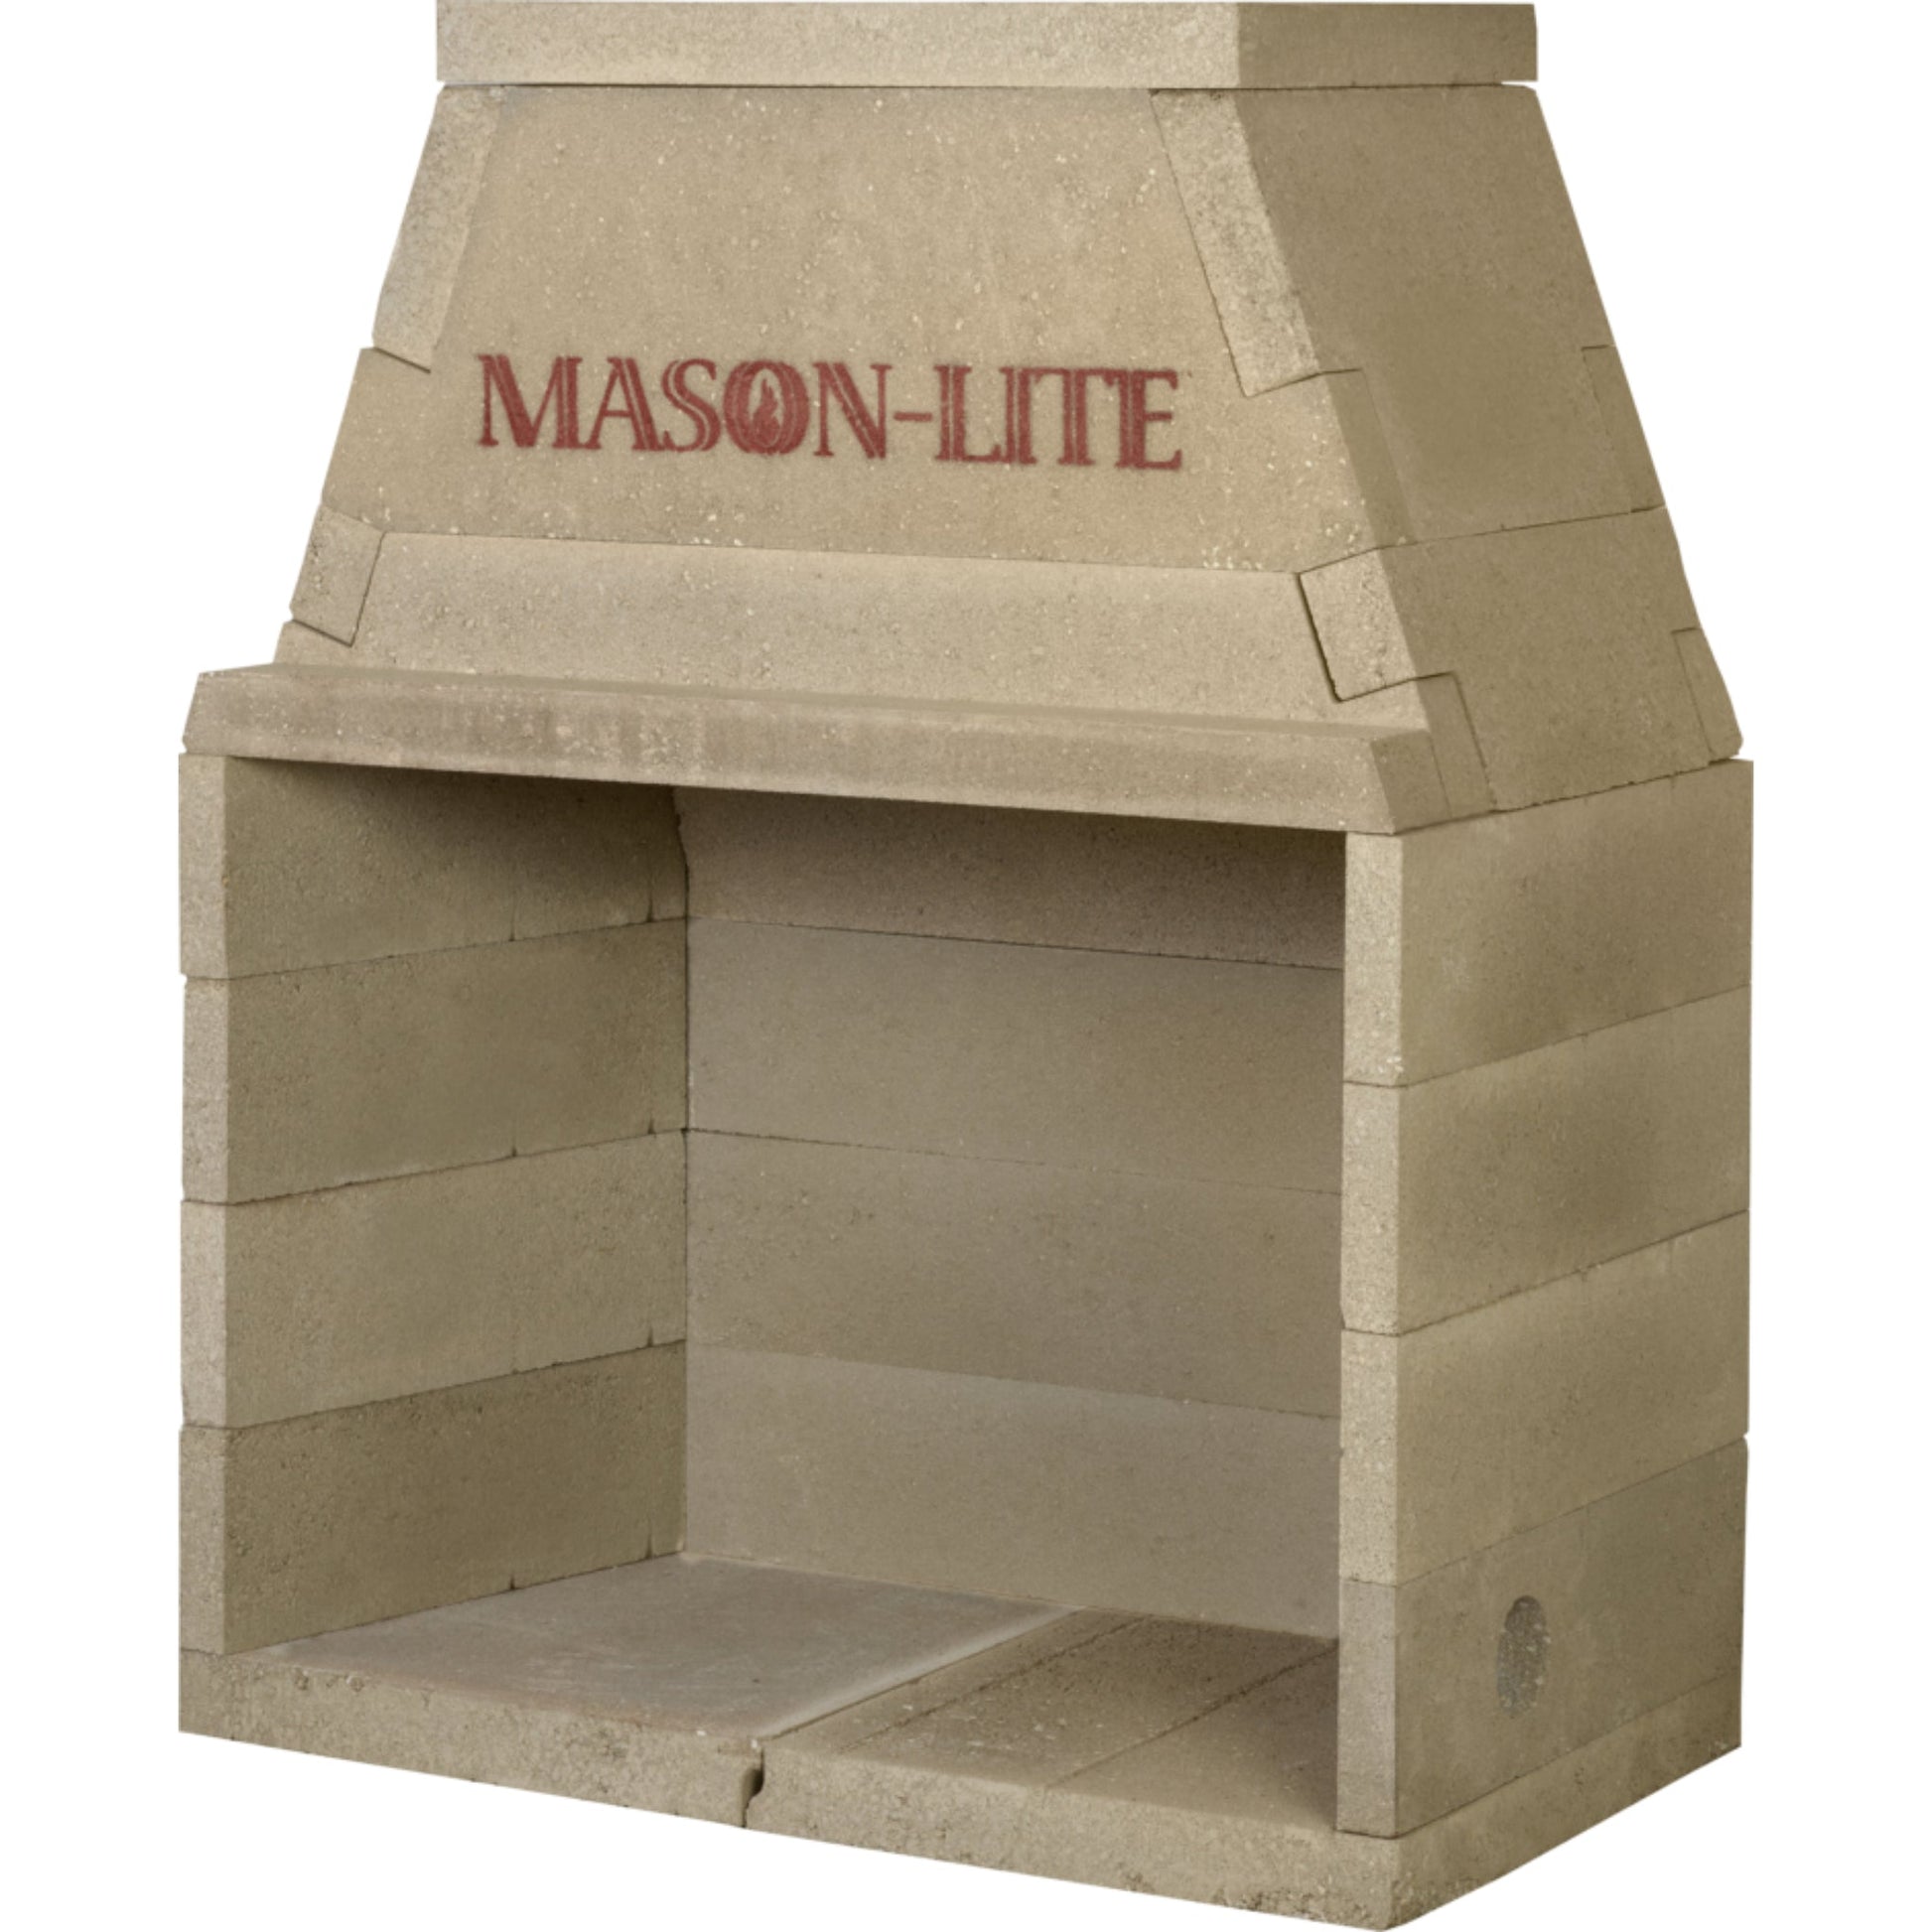 Mason-Lite 63" Pre-Cast Masonry Firebox Kit